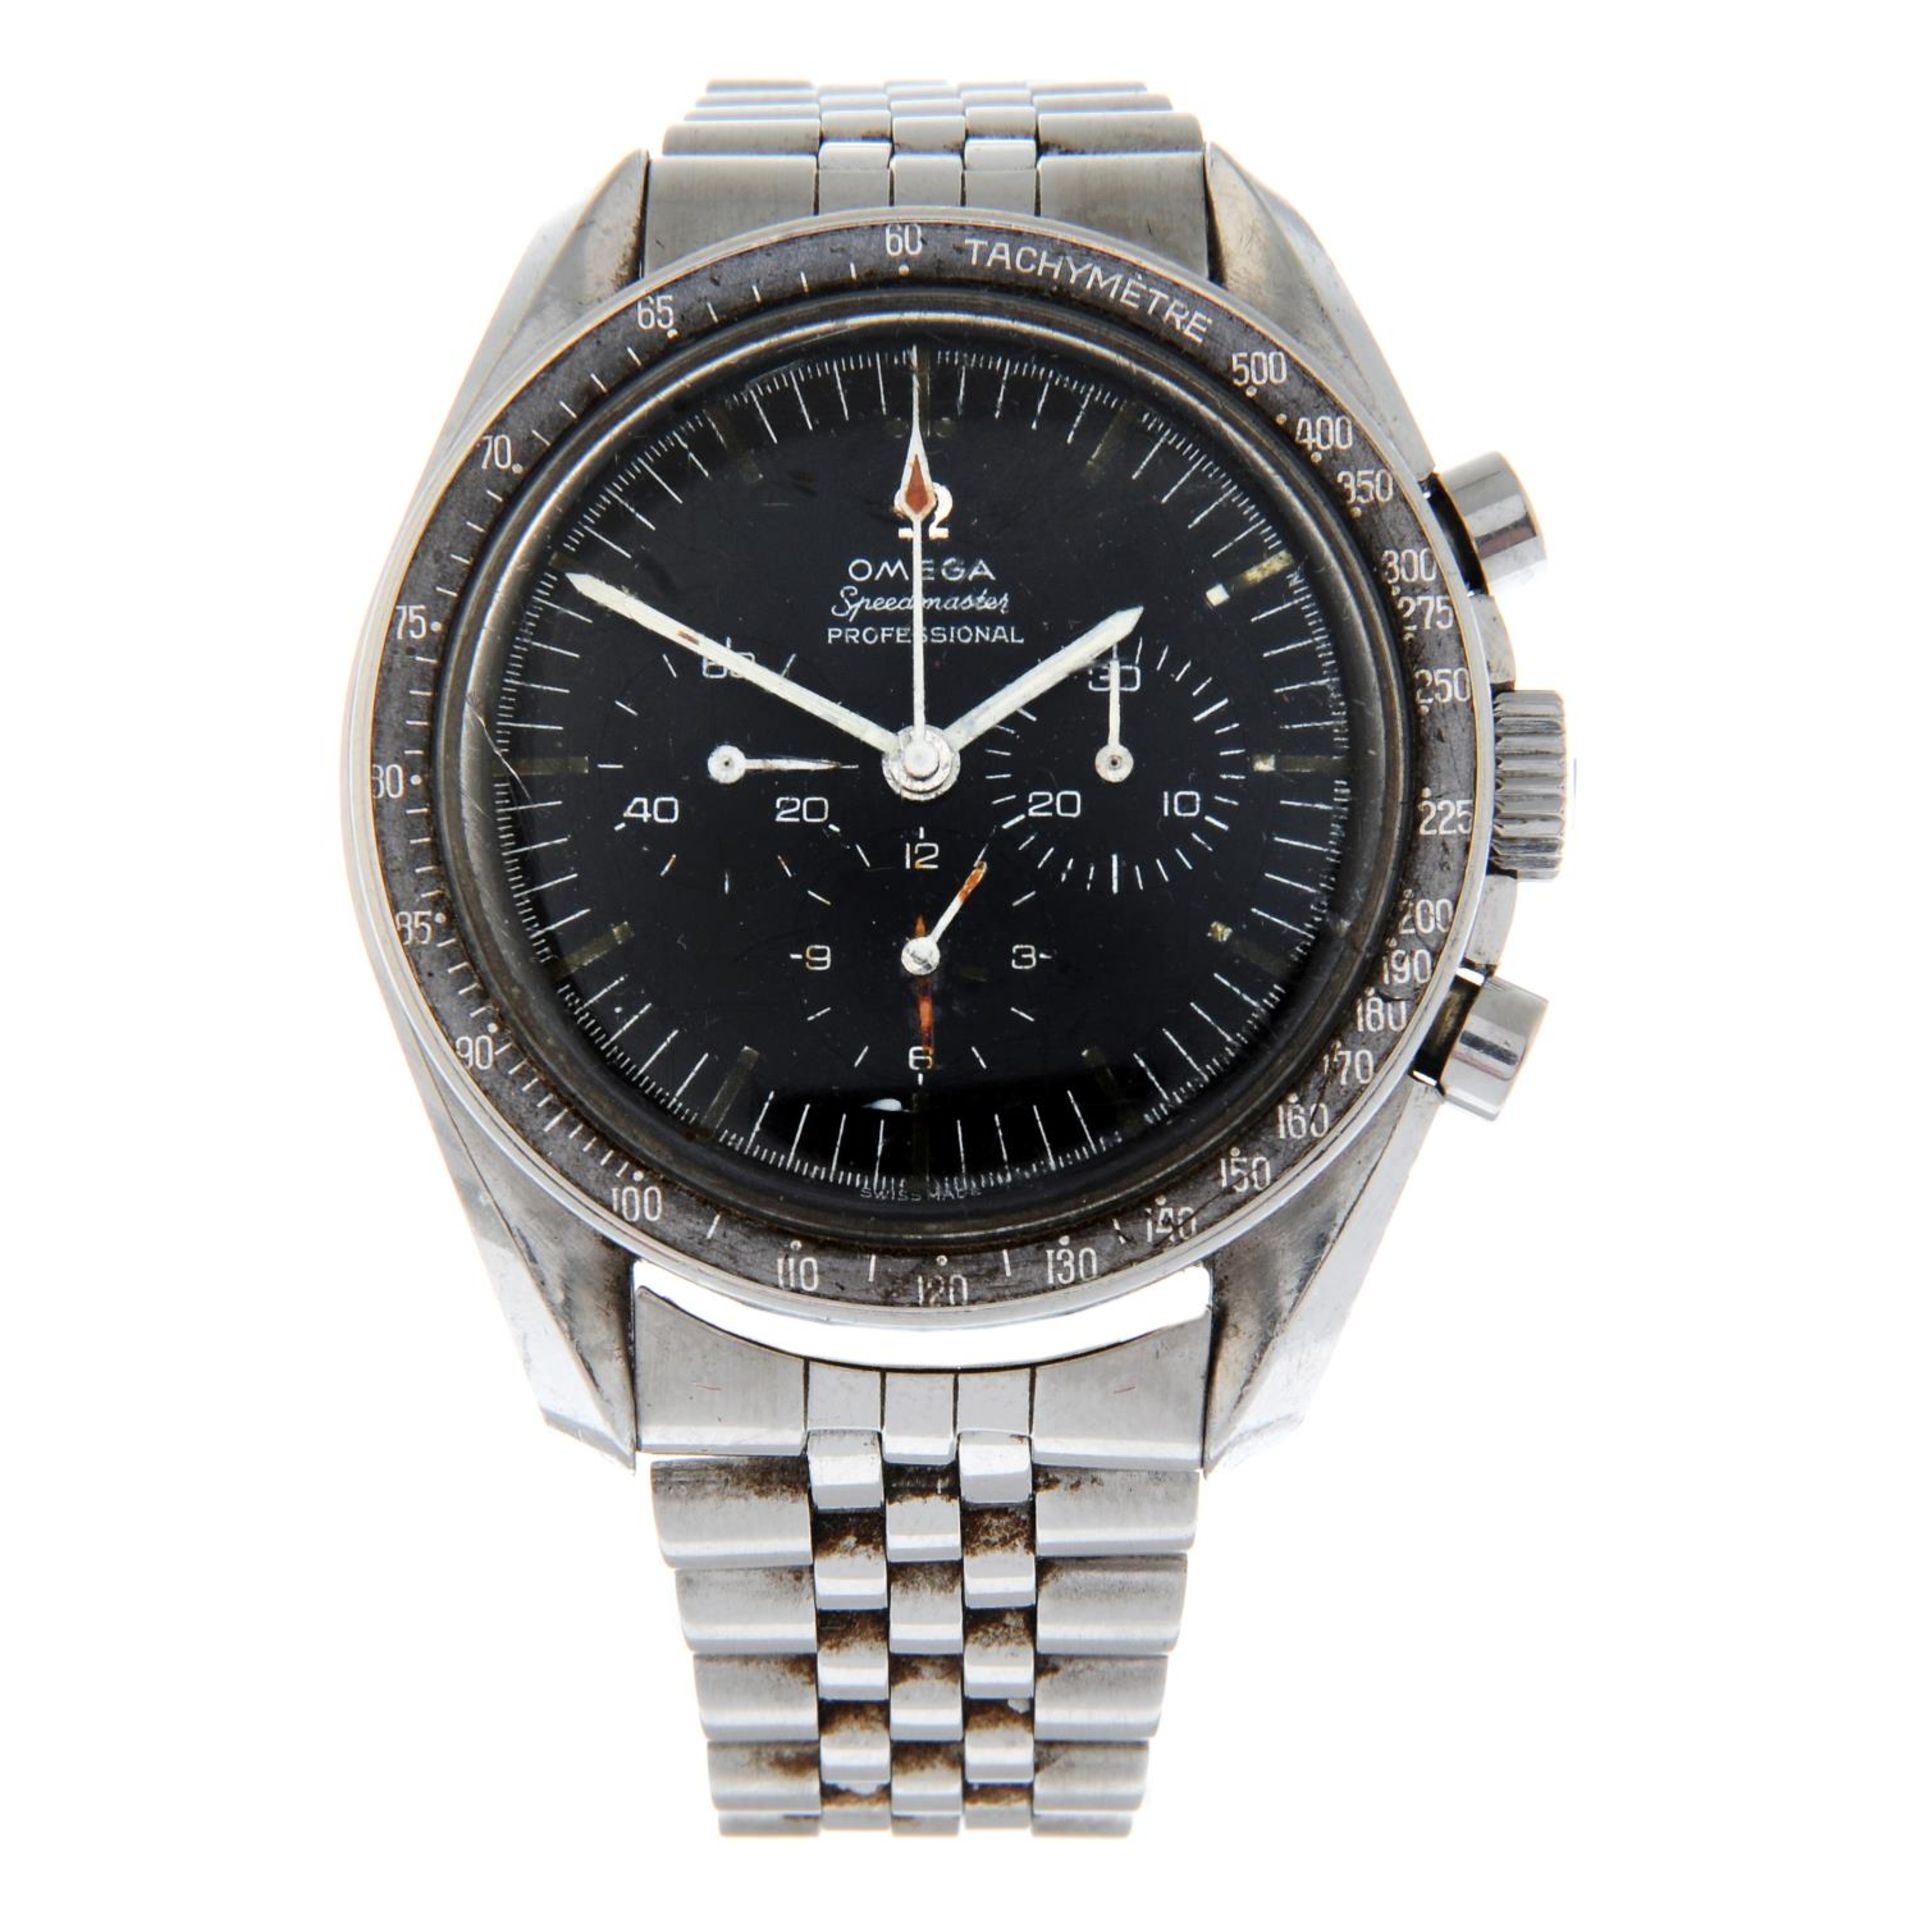 OMEGA - a Speedmaster Professional chronograph bracelet watch.